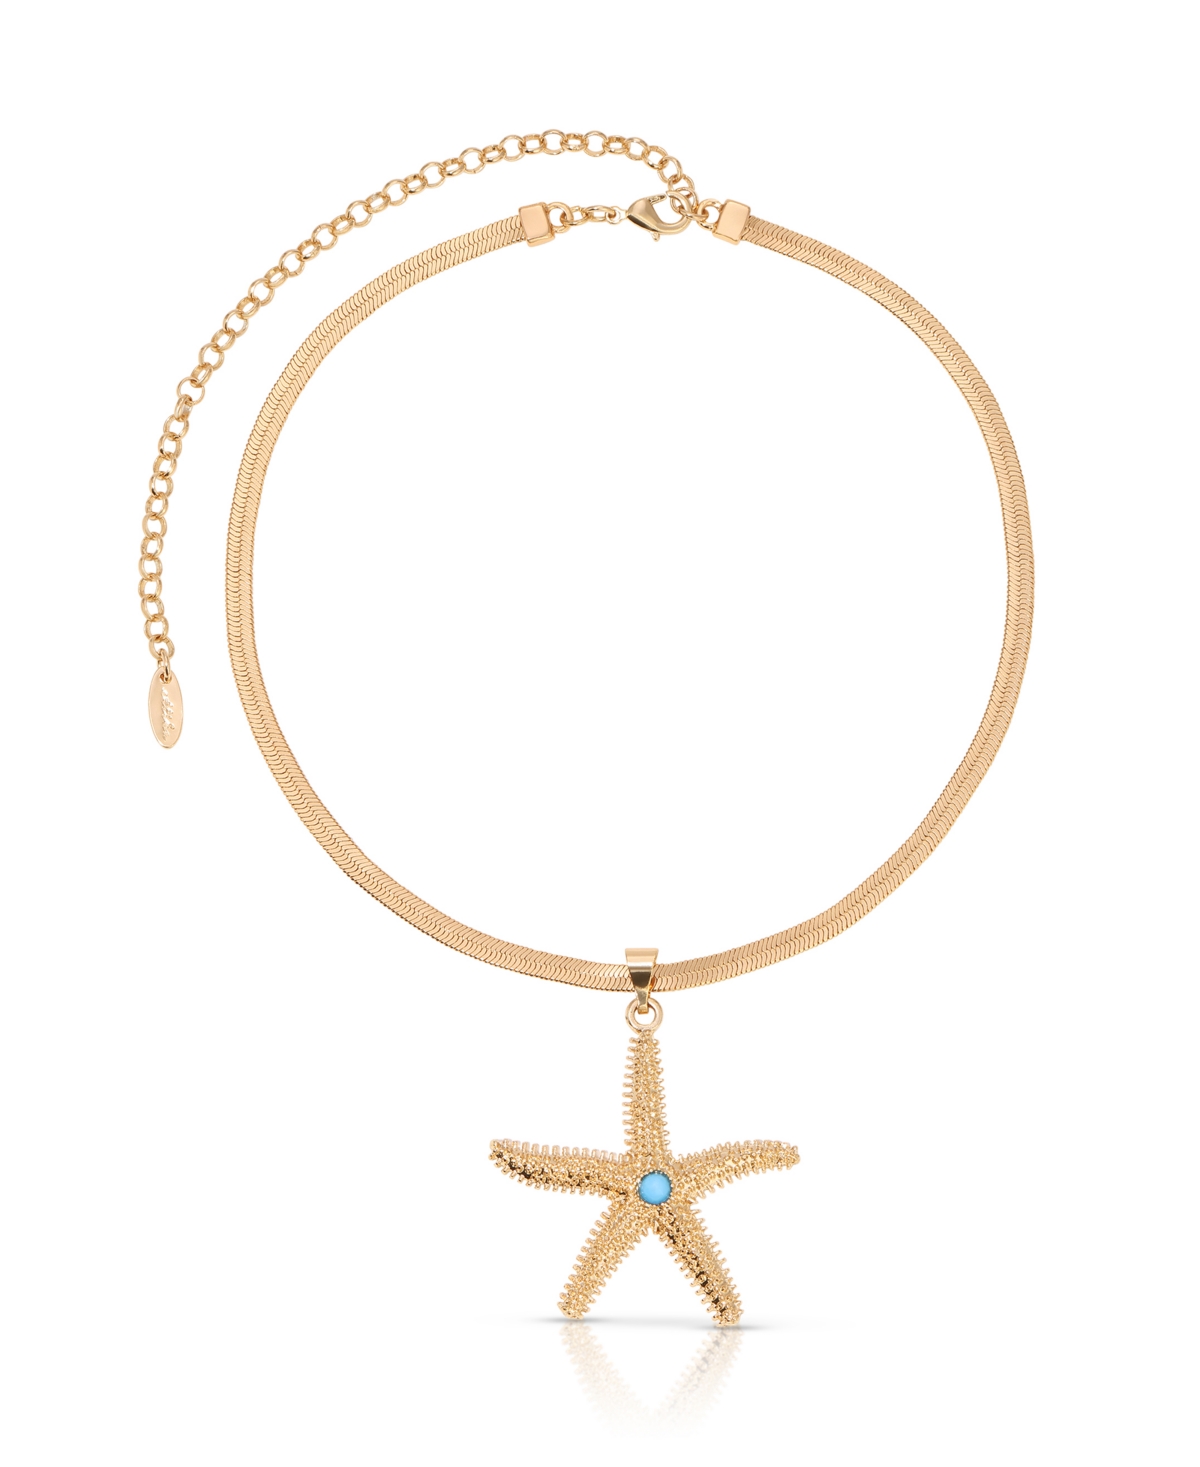 Turquoise Starfish Pendant Herringbone Chain Necklace - Turquoise